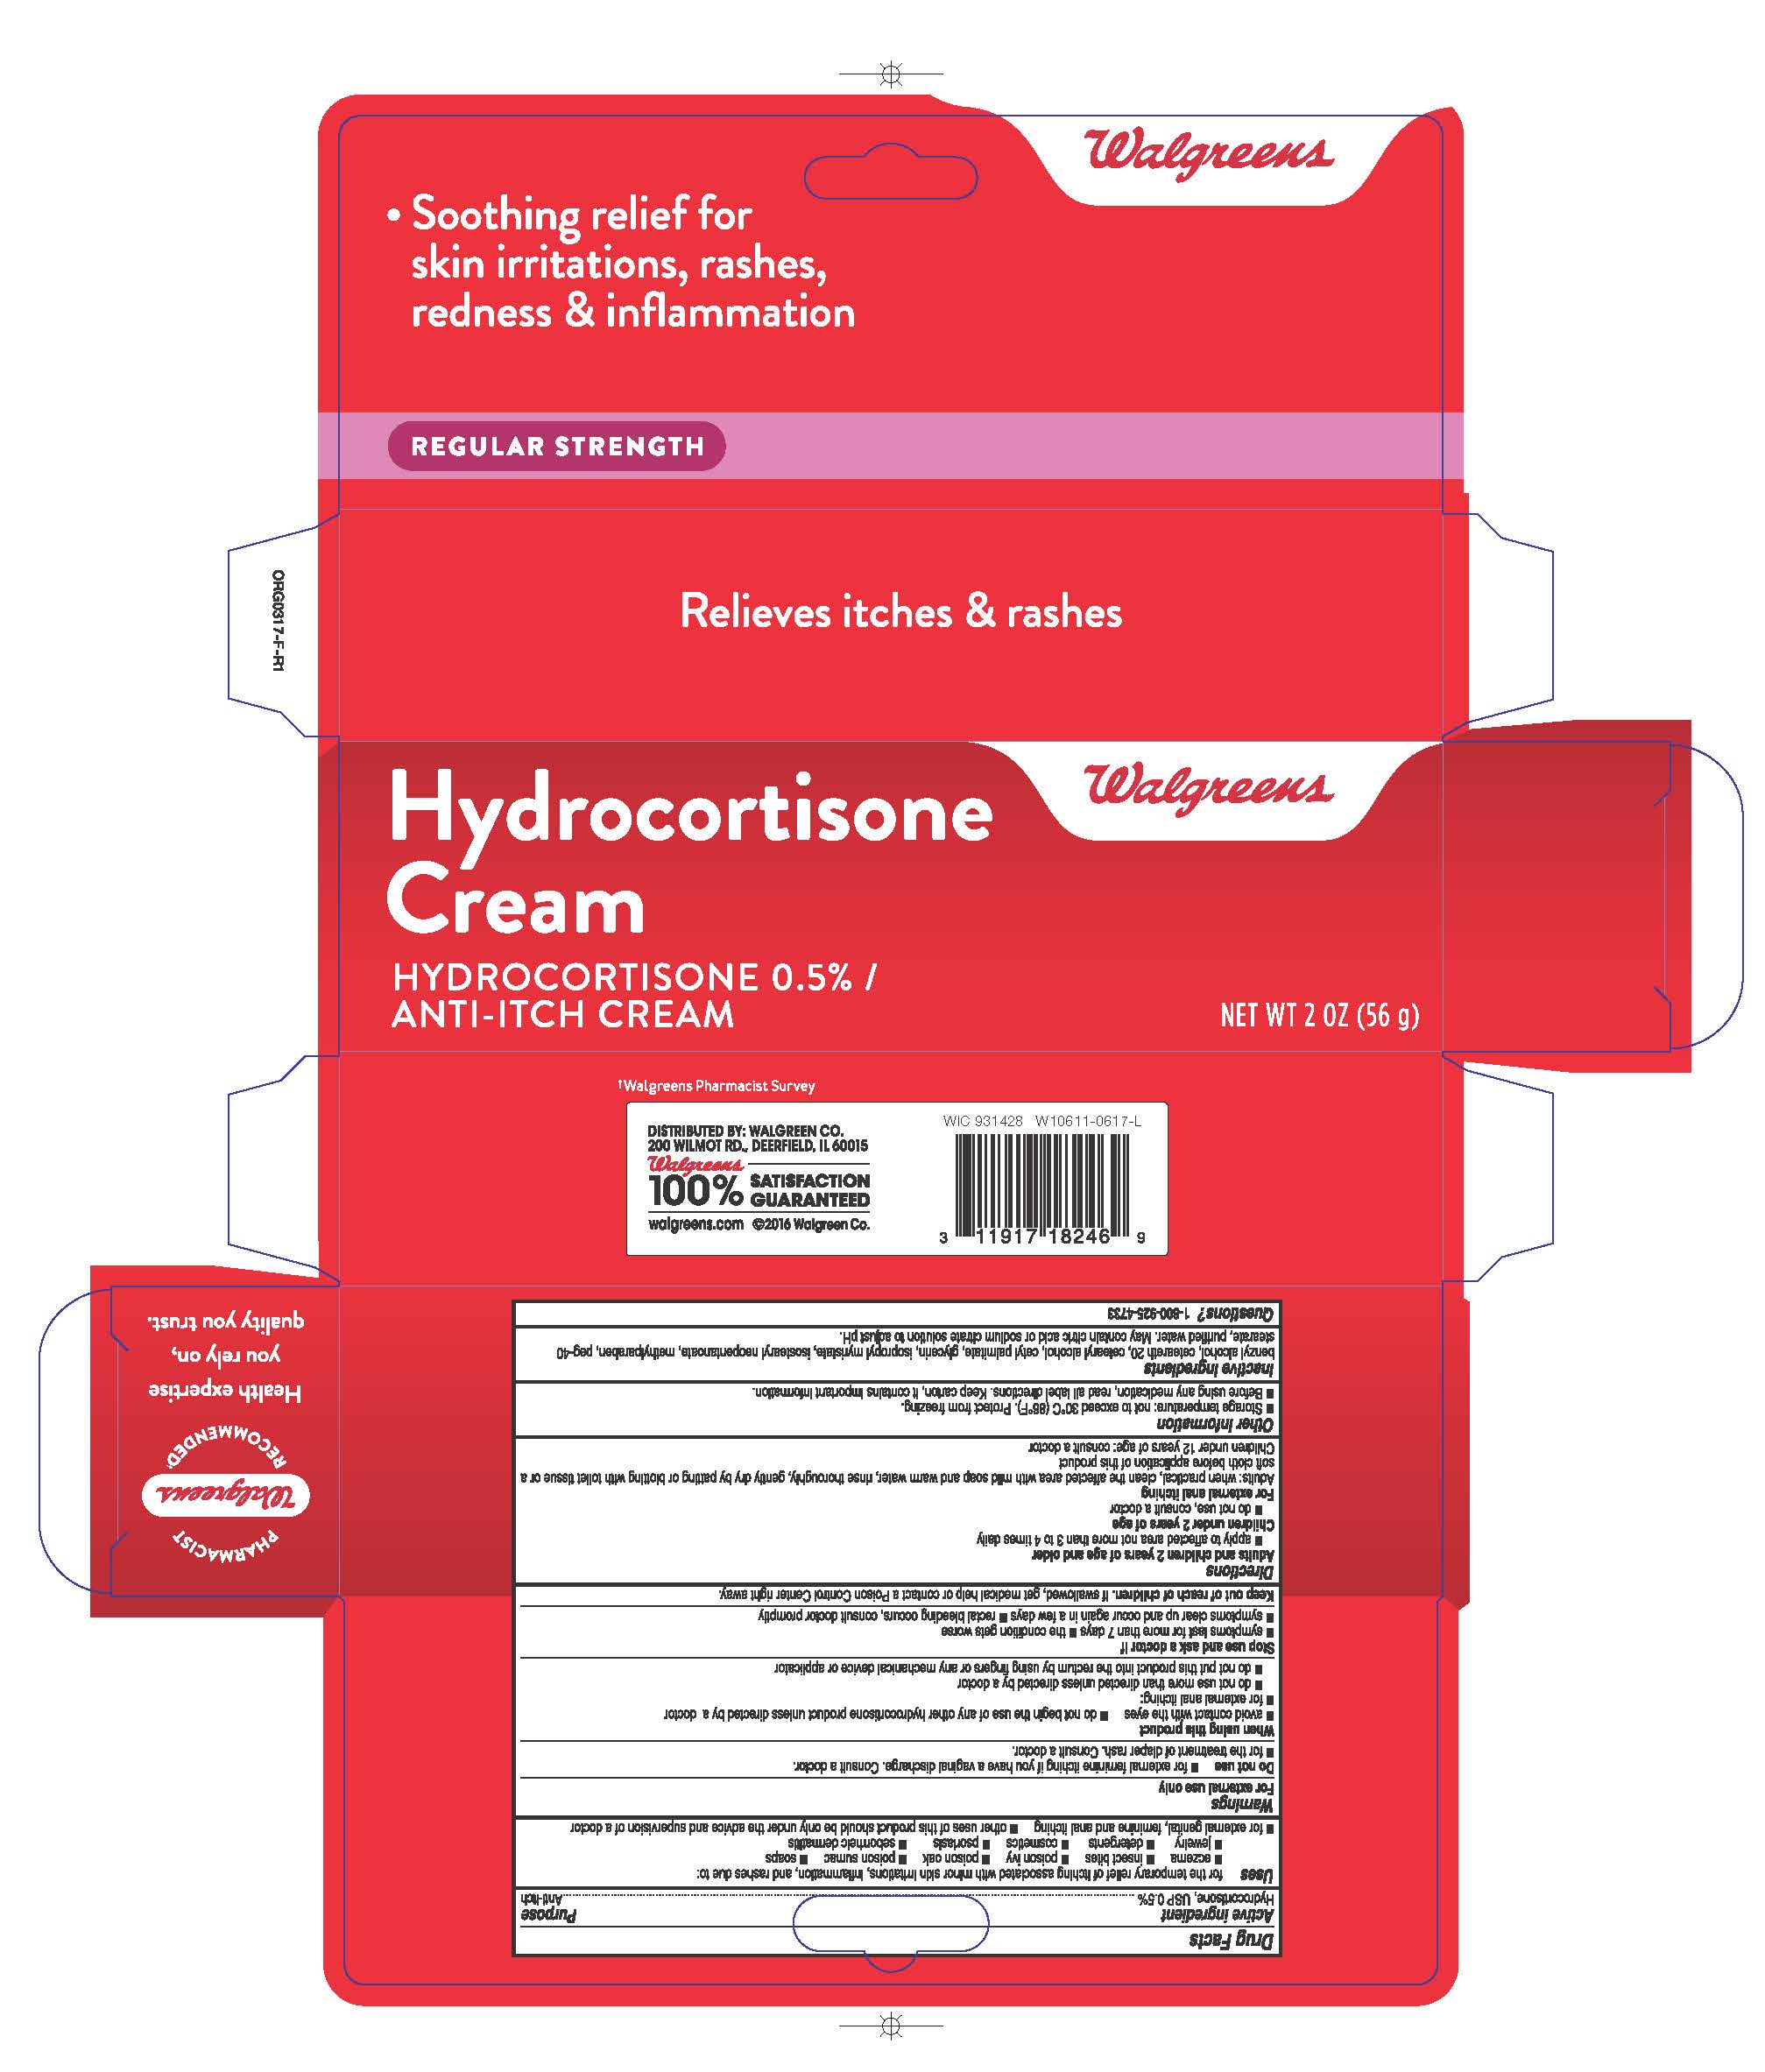 Regular Strength Hydrocortisone Cream | Hydrocortisone Cream Cream and breastfeeding